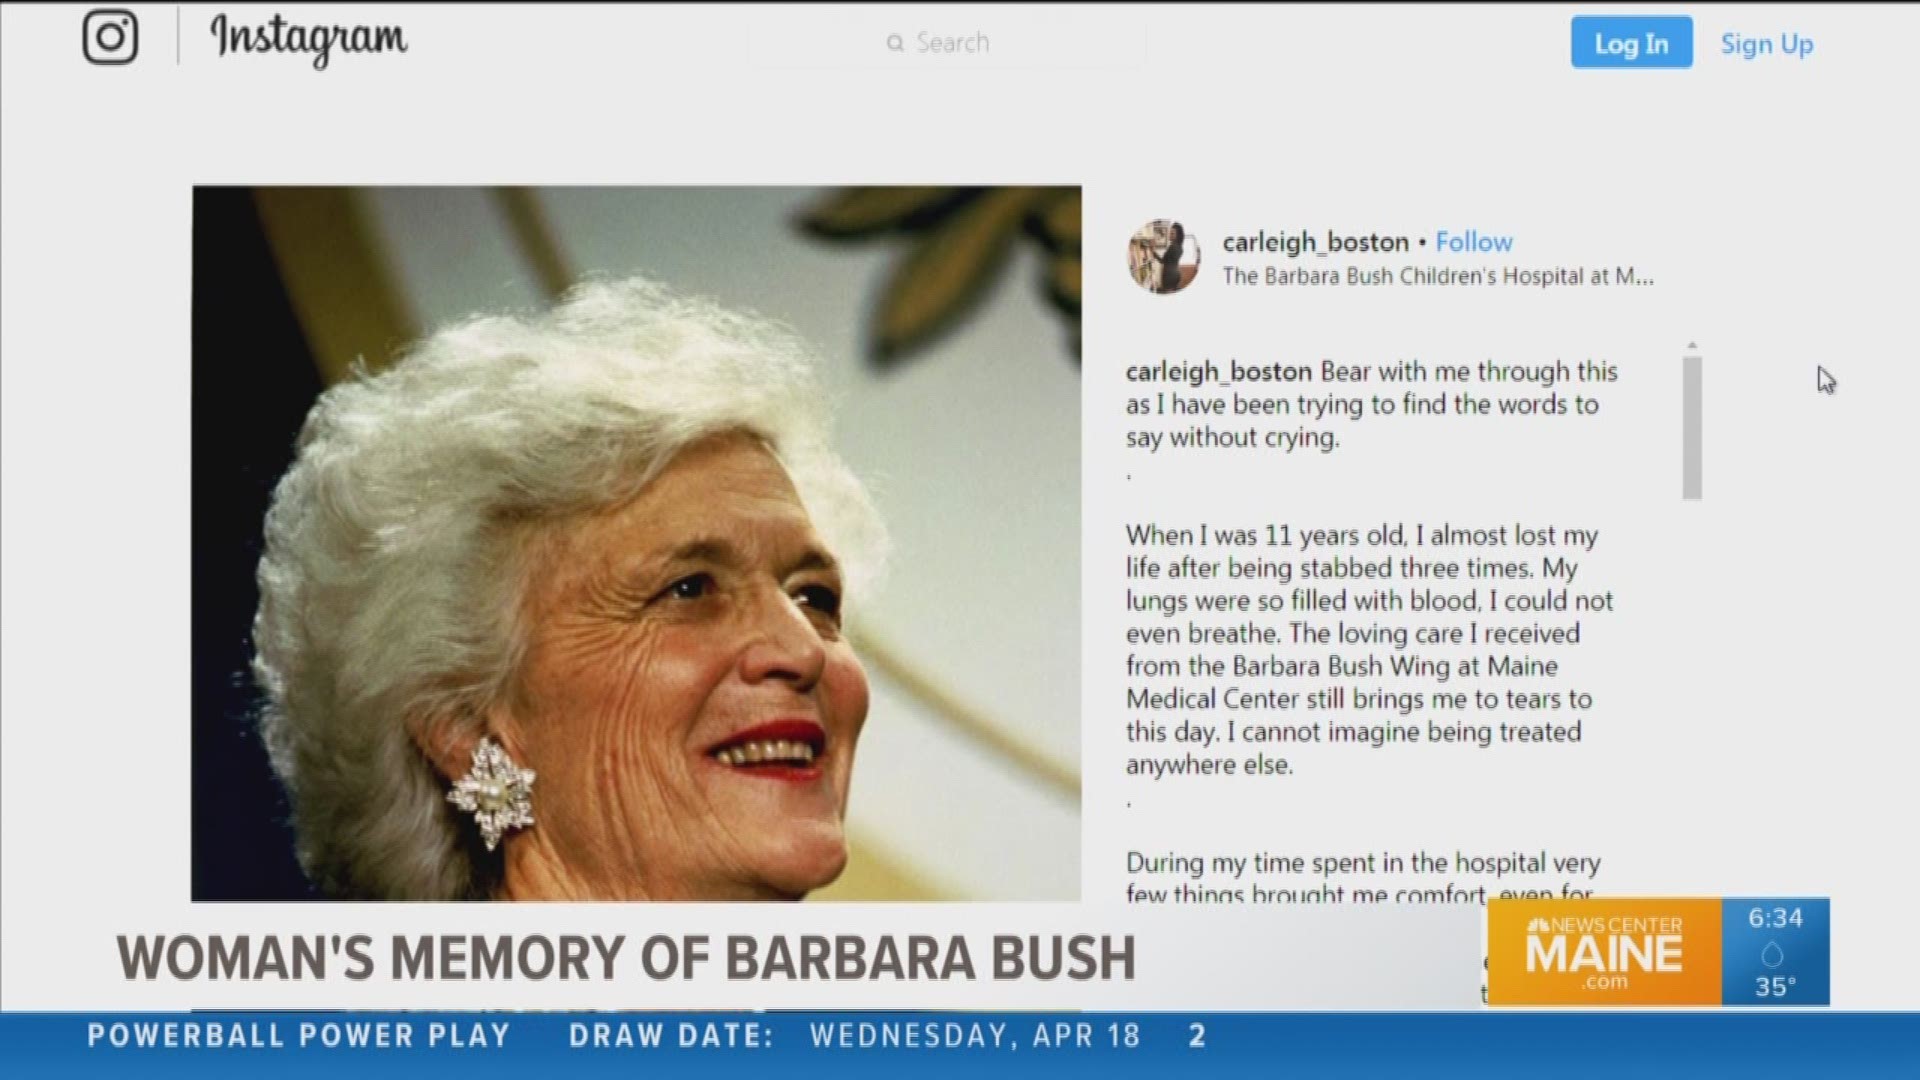 A memory of Barbara Bush